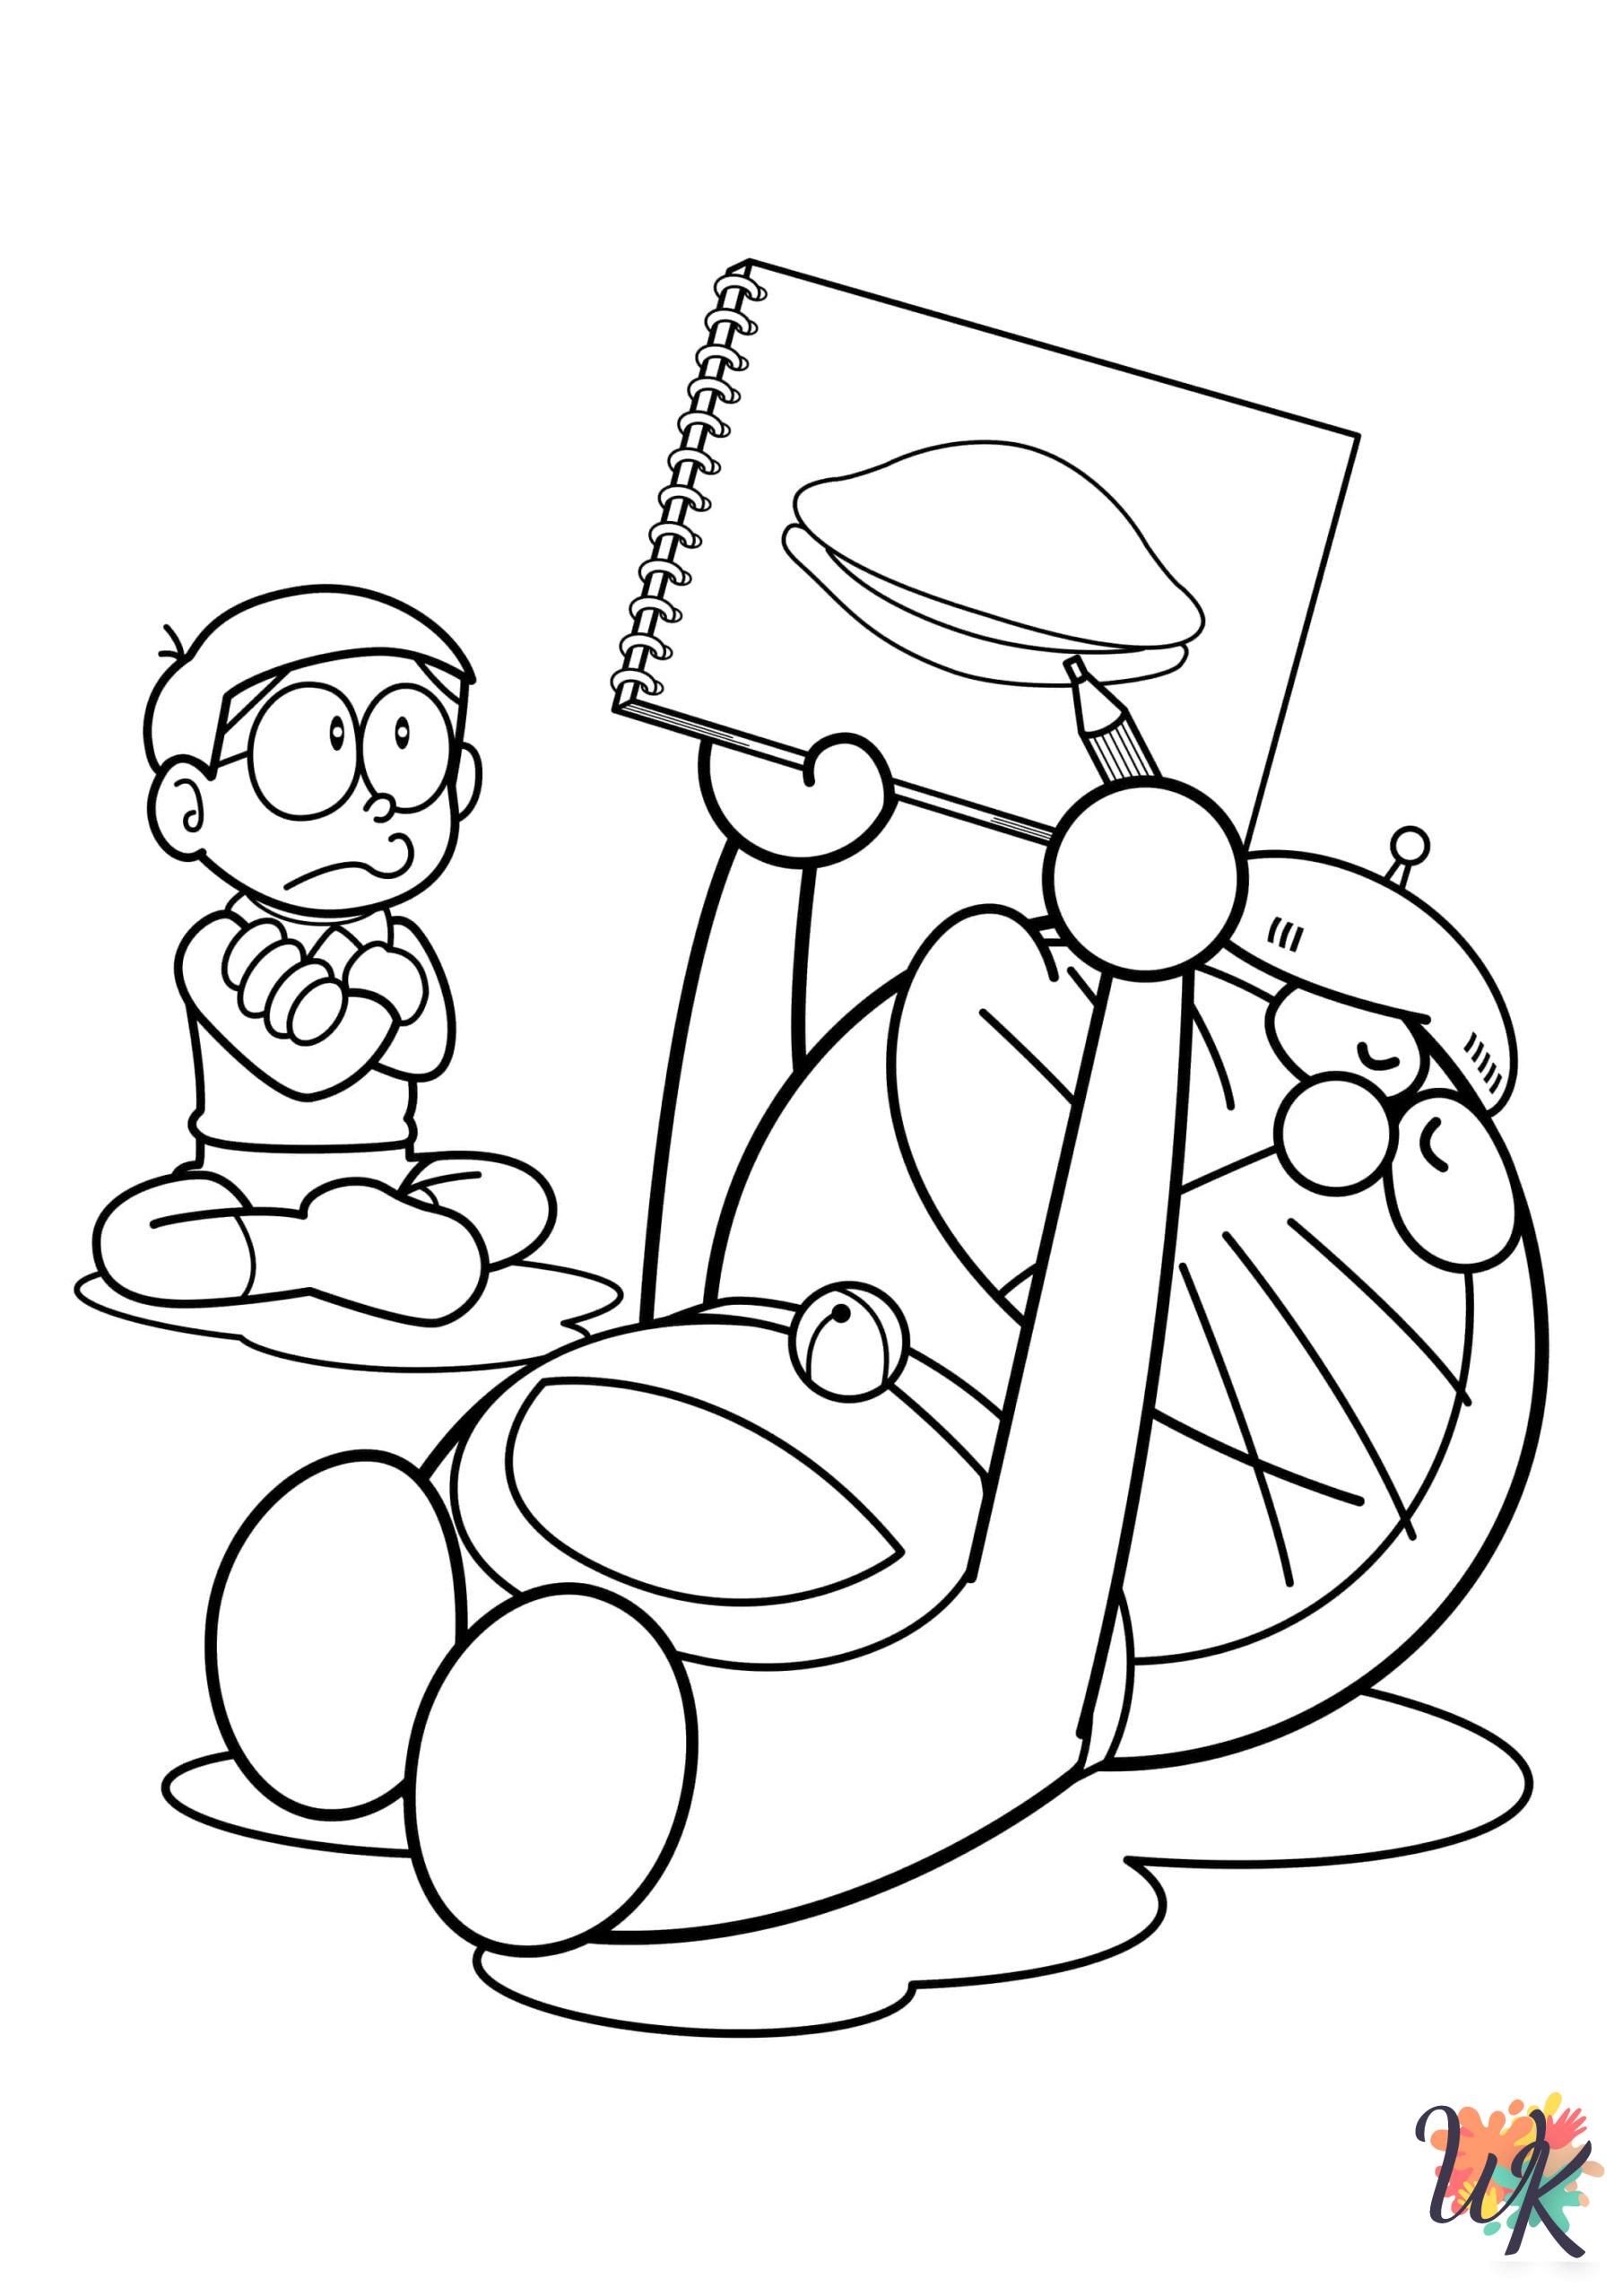 Doraemon coloring pages for preschoolers